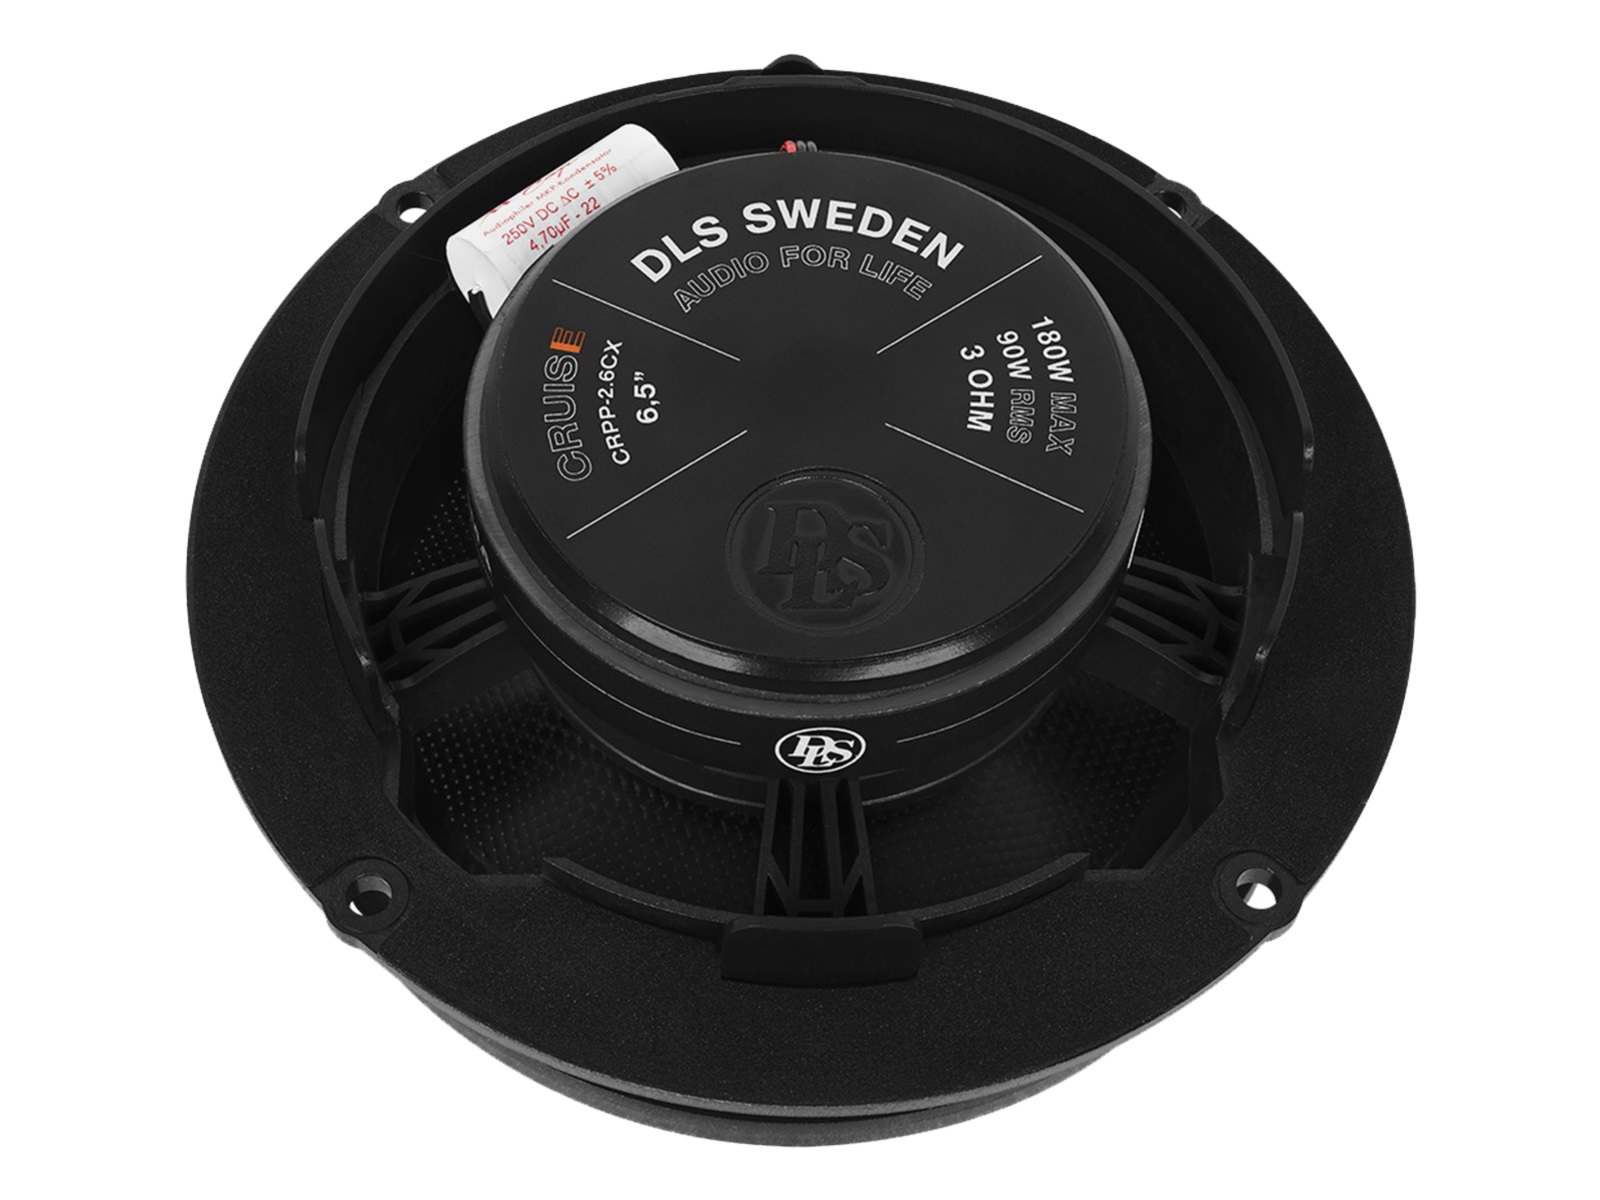 DLS CRPP-2.6CX 16,5 cm (6.5") 2-Wege Koaxial Lautsprecher kompatibel mit MAN, Seat, Skoda, VW